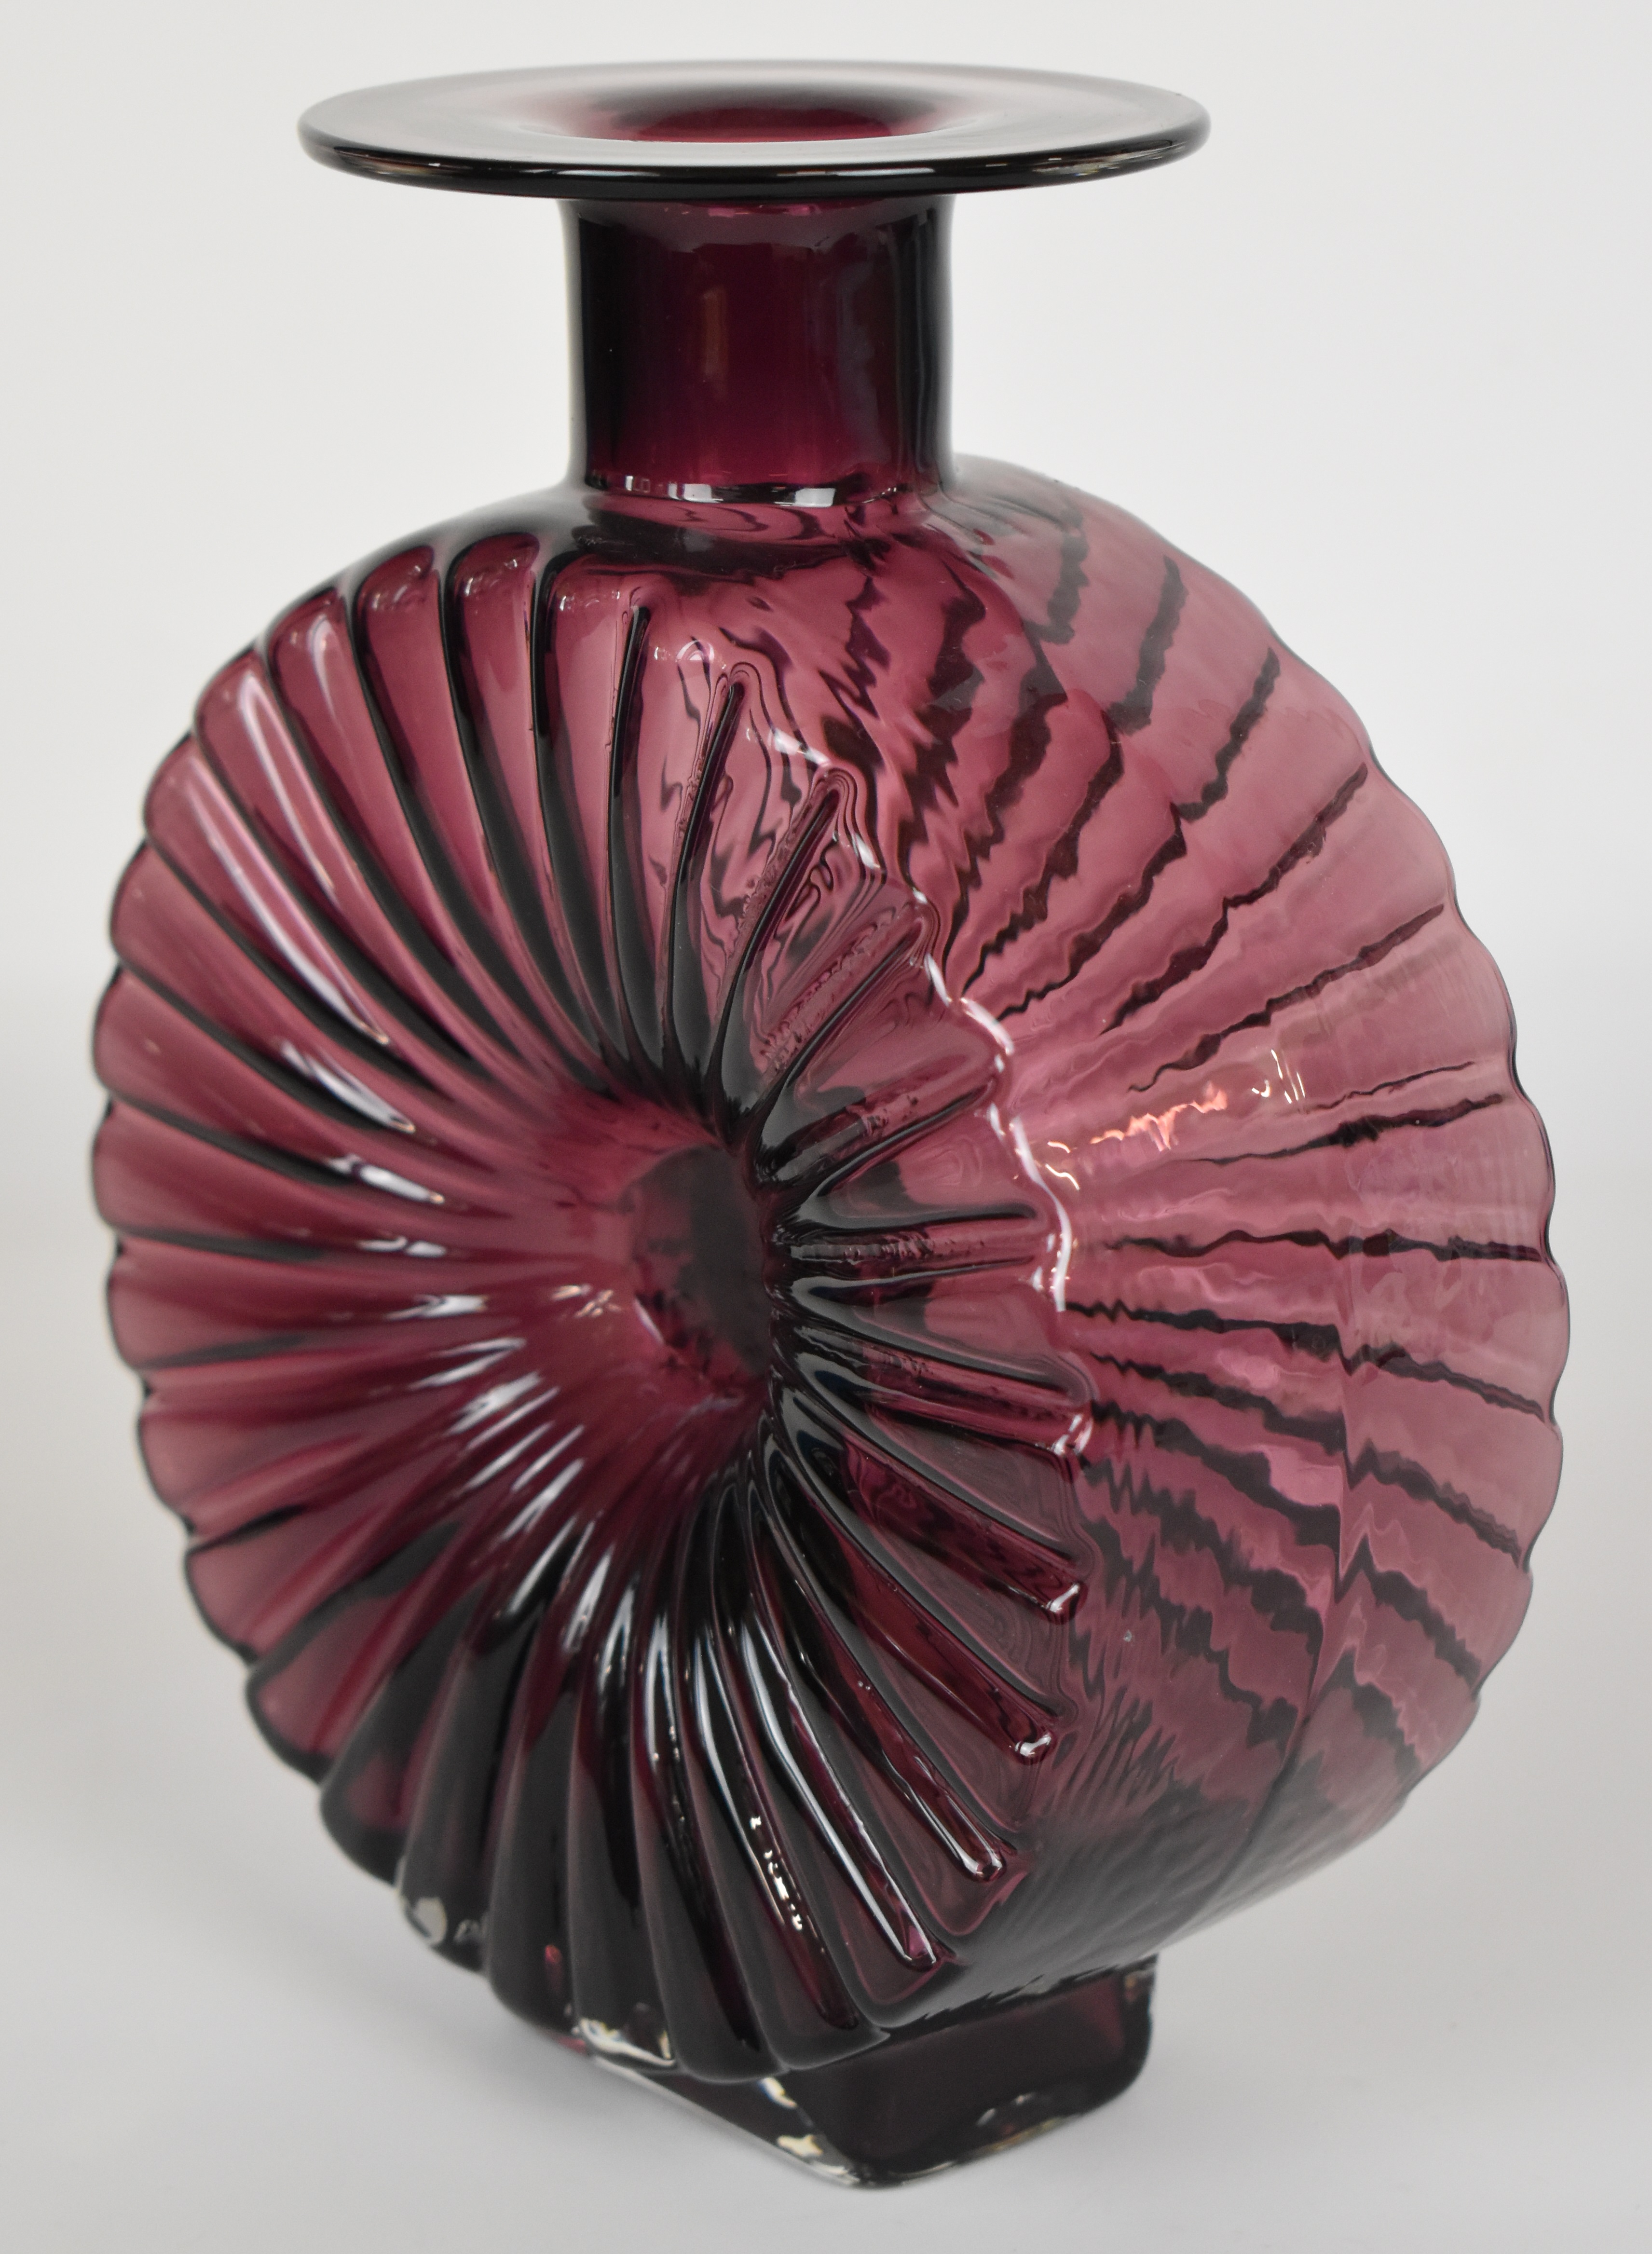 Helena Tynell for Riihimaen Lasi Riihimaki Aurinkopullo Sun Bottle glass vase in aubergine, 22.5cm - Image 2 of 4